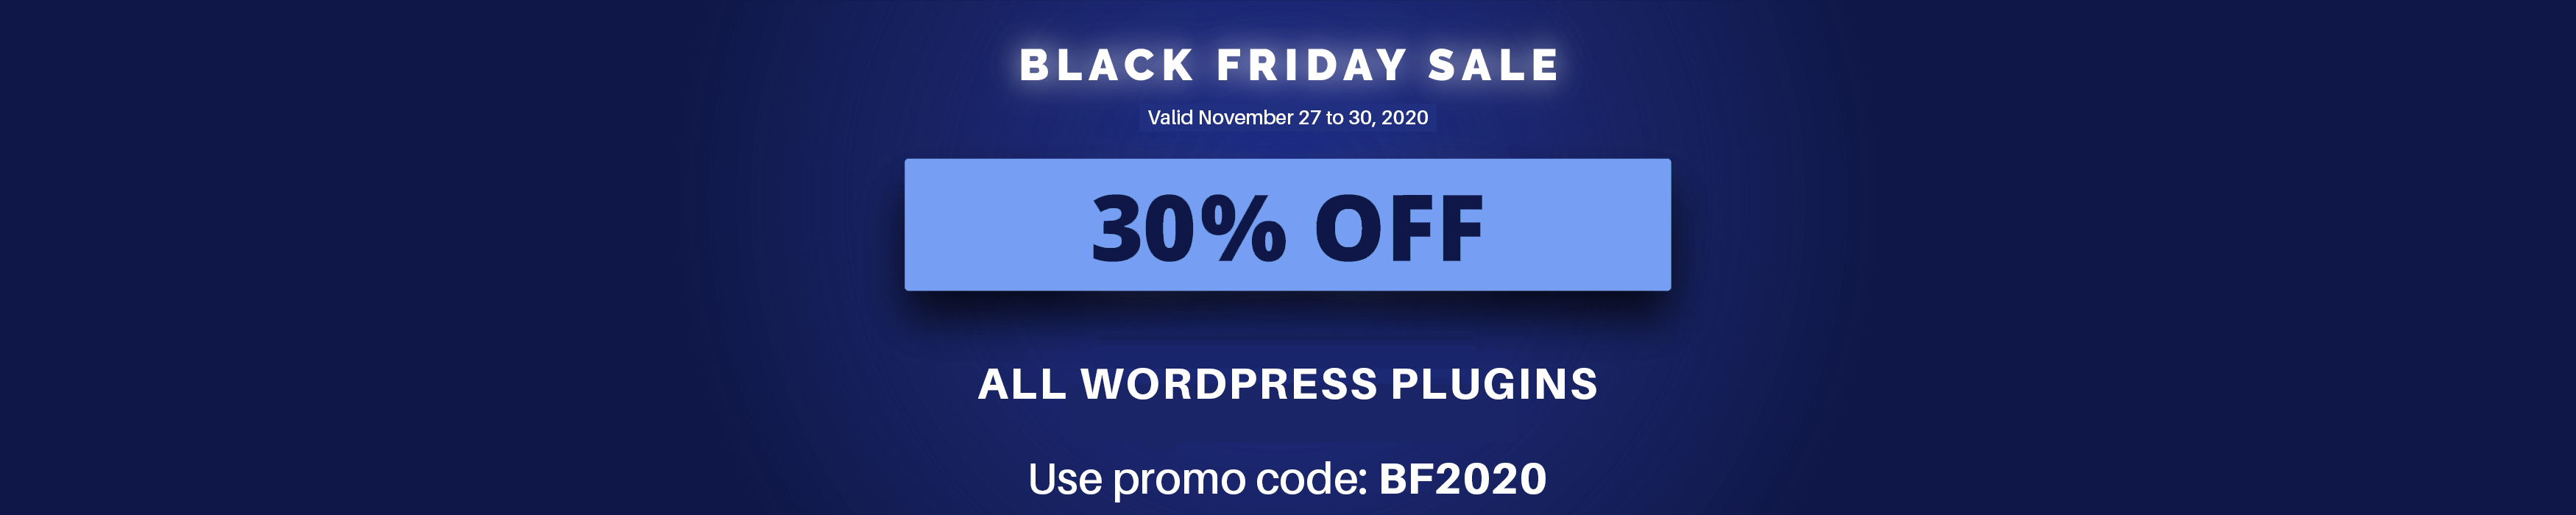 WordPress Plugins Black Friday